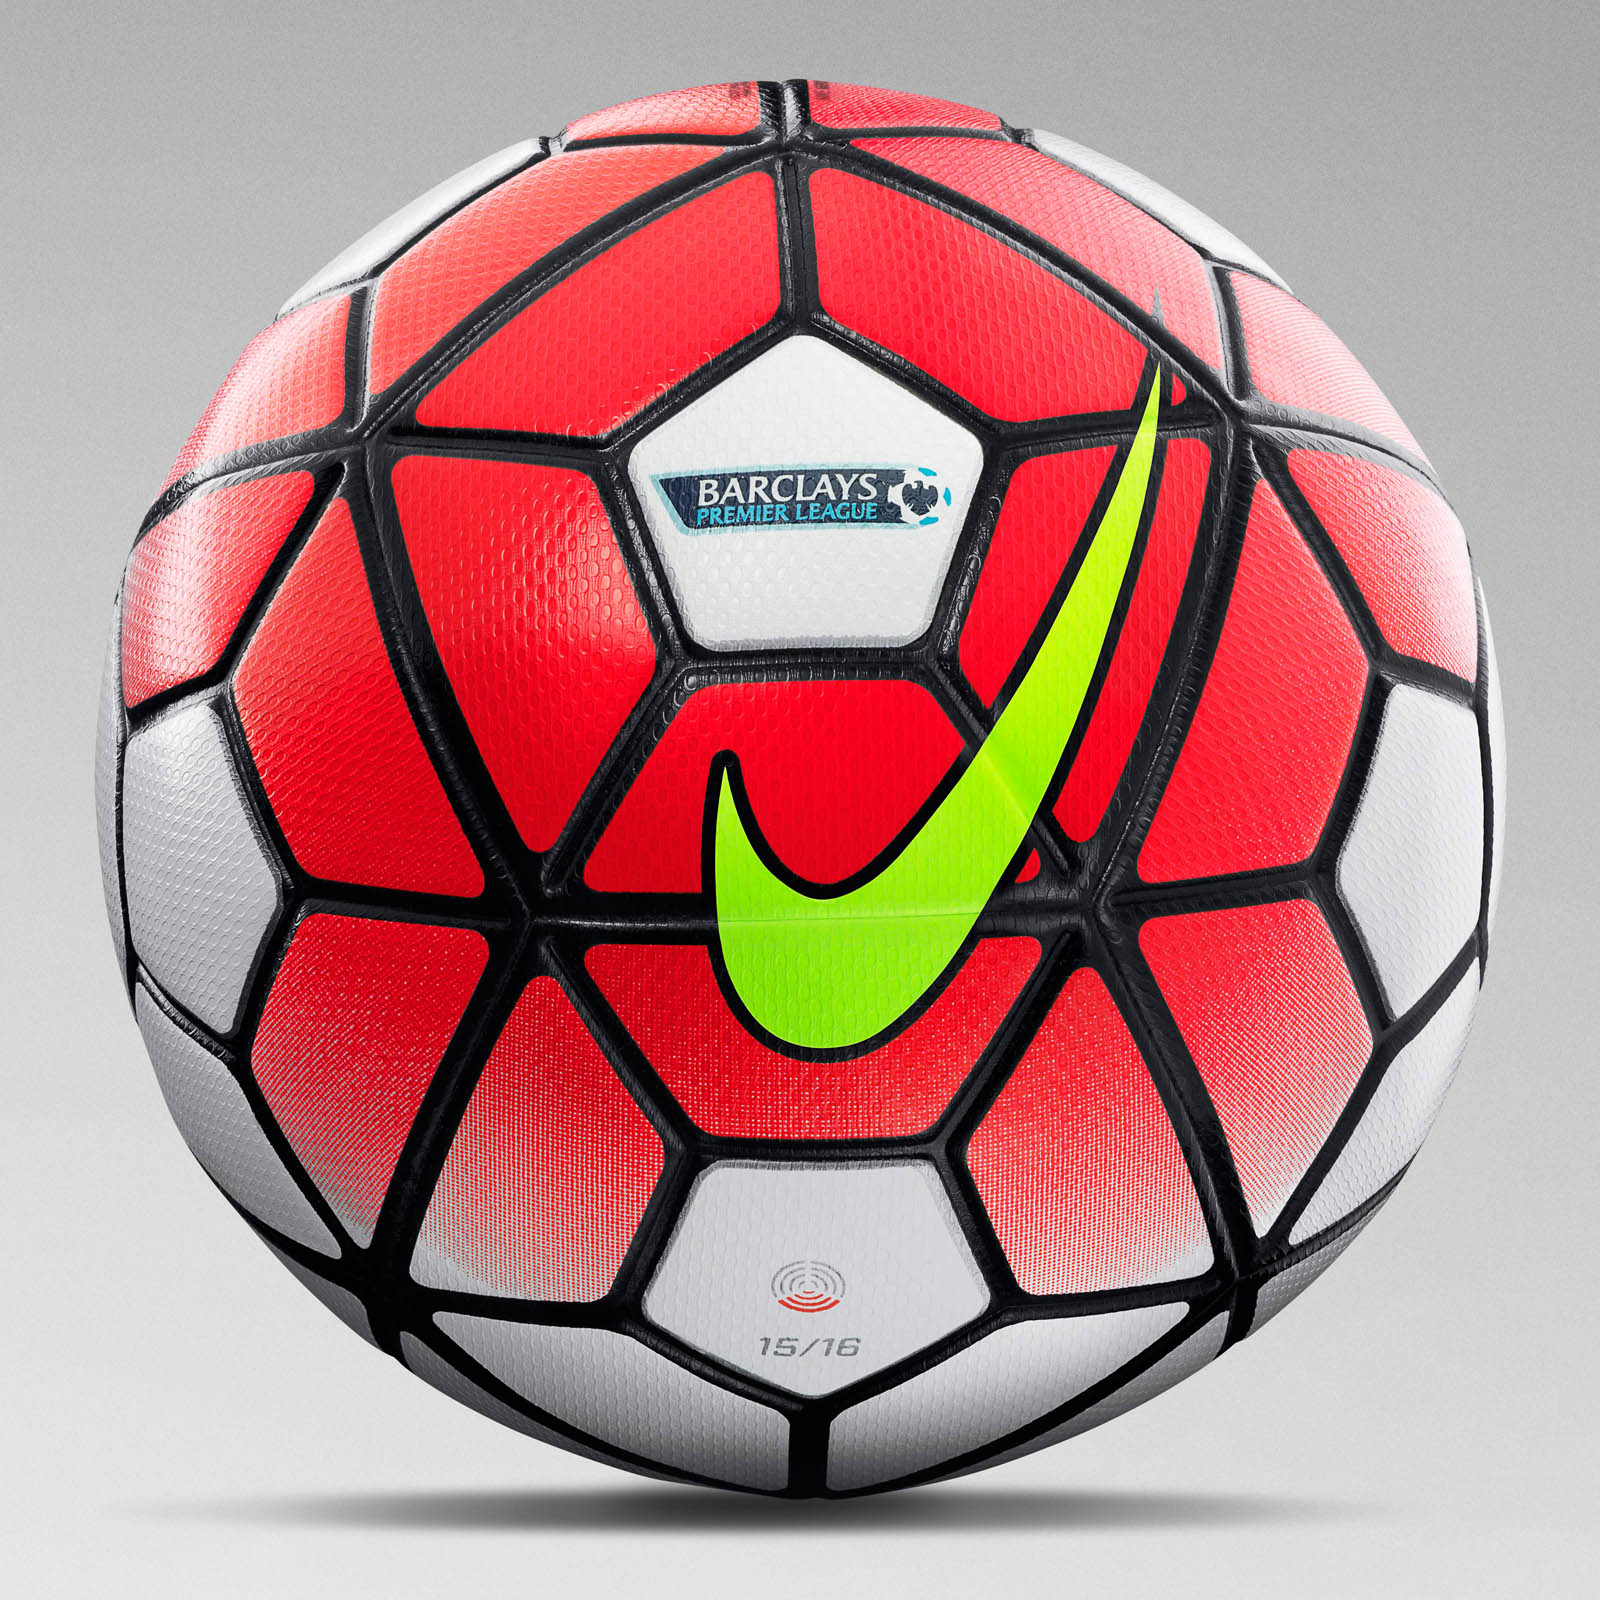 Nike Ordem 15-16 Premier League Ball Released - Footy Headlines